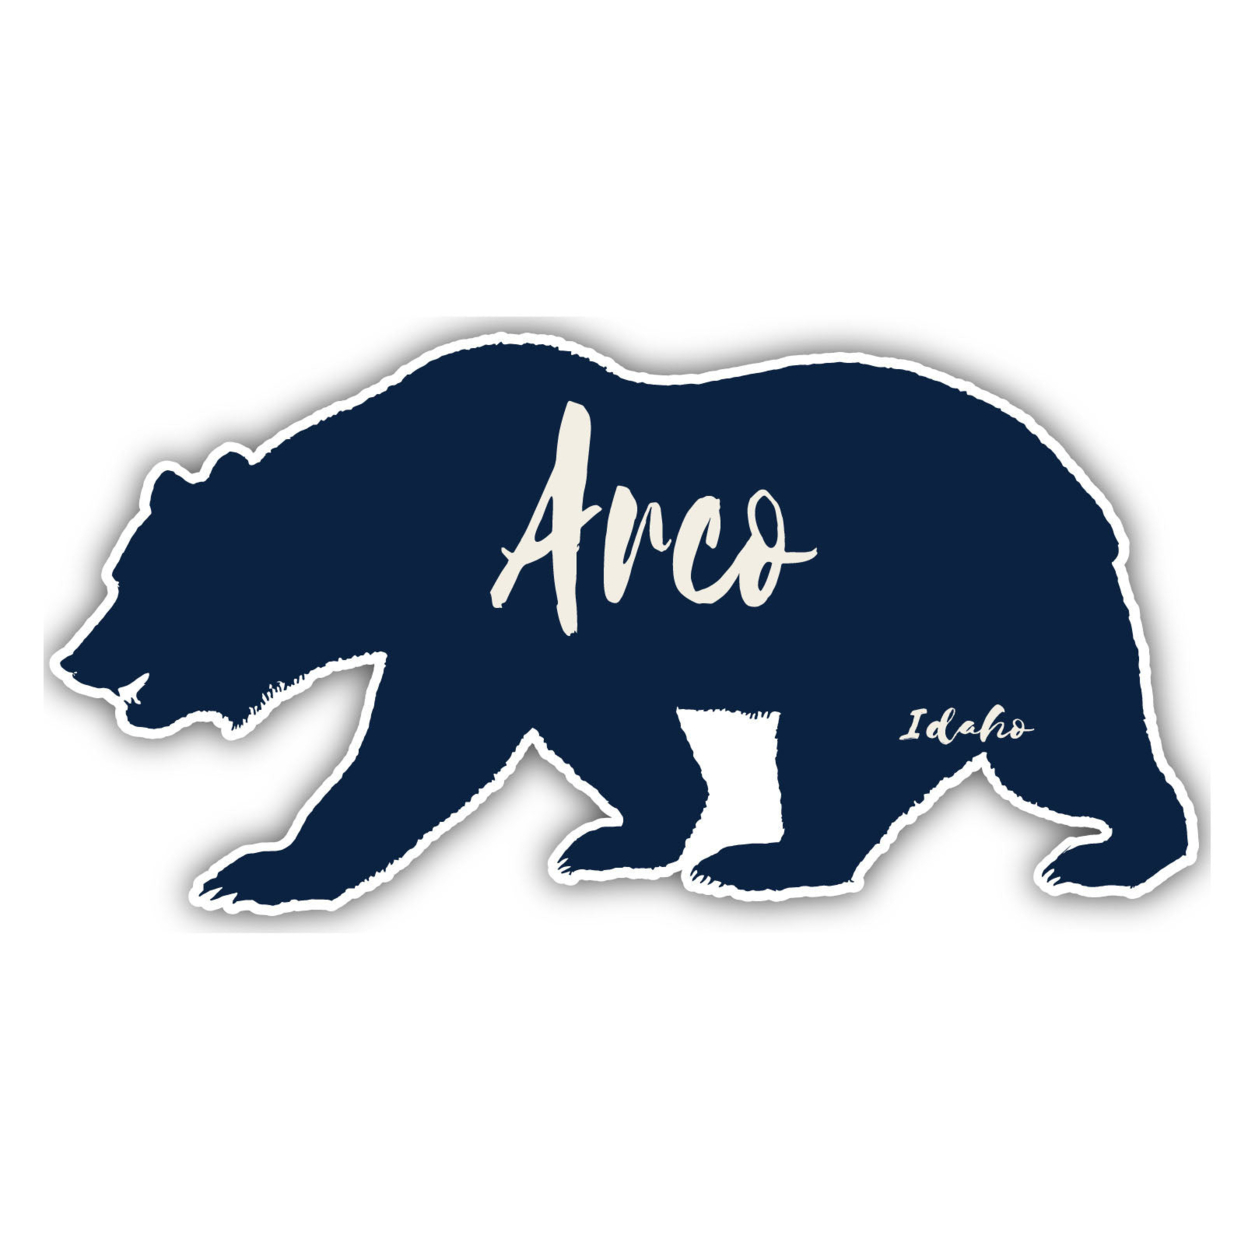 Arco Idaho Souvenir Decorative Stickers (Choose Theme And Size) - Single Unit, 8-Inch, Bear